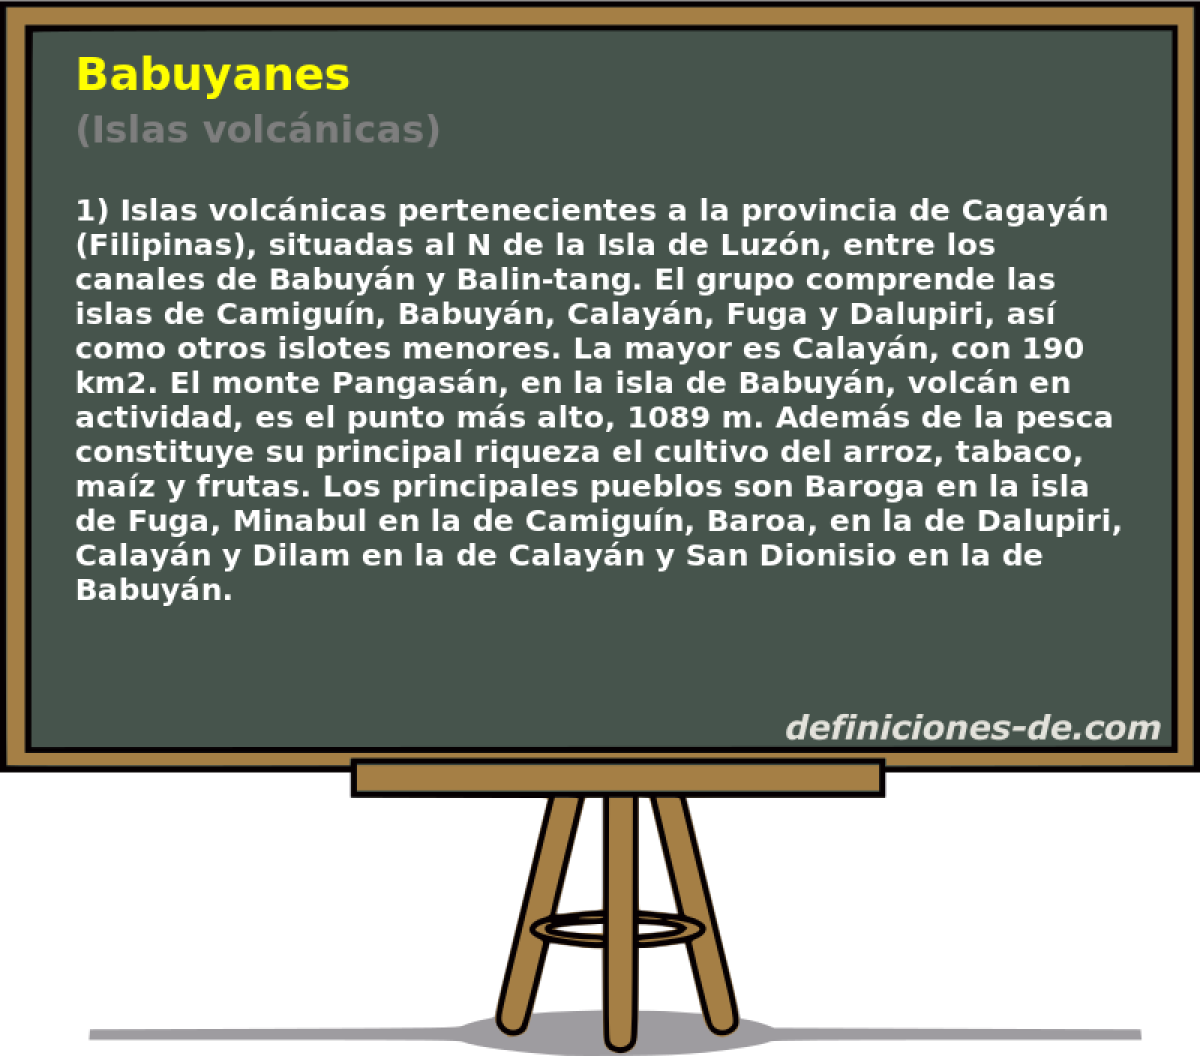 Babuyanes (Islas volcnicas)